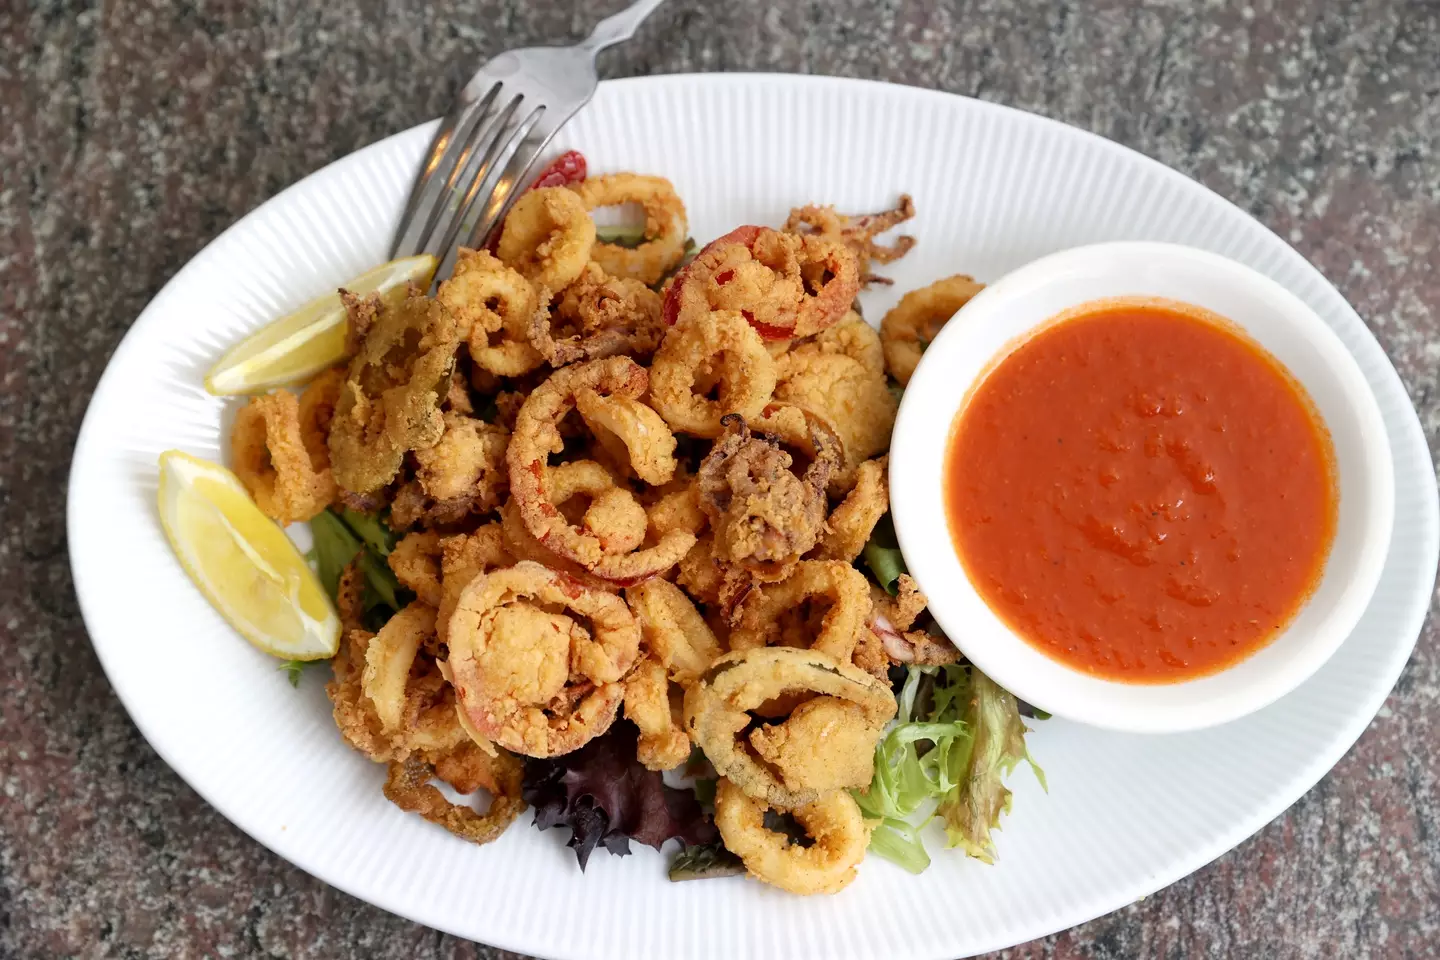 Fried calamari is still up for debate.